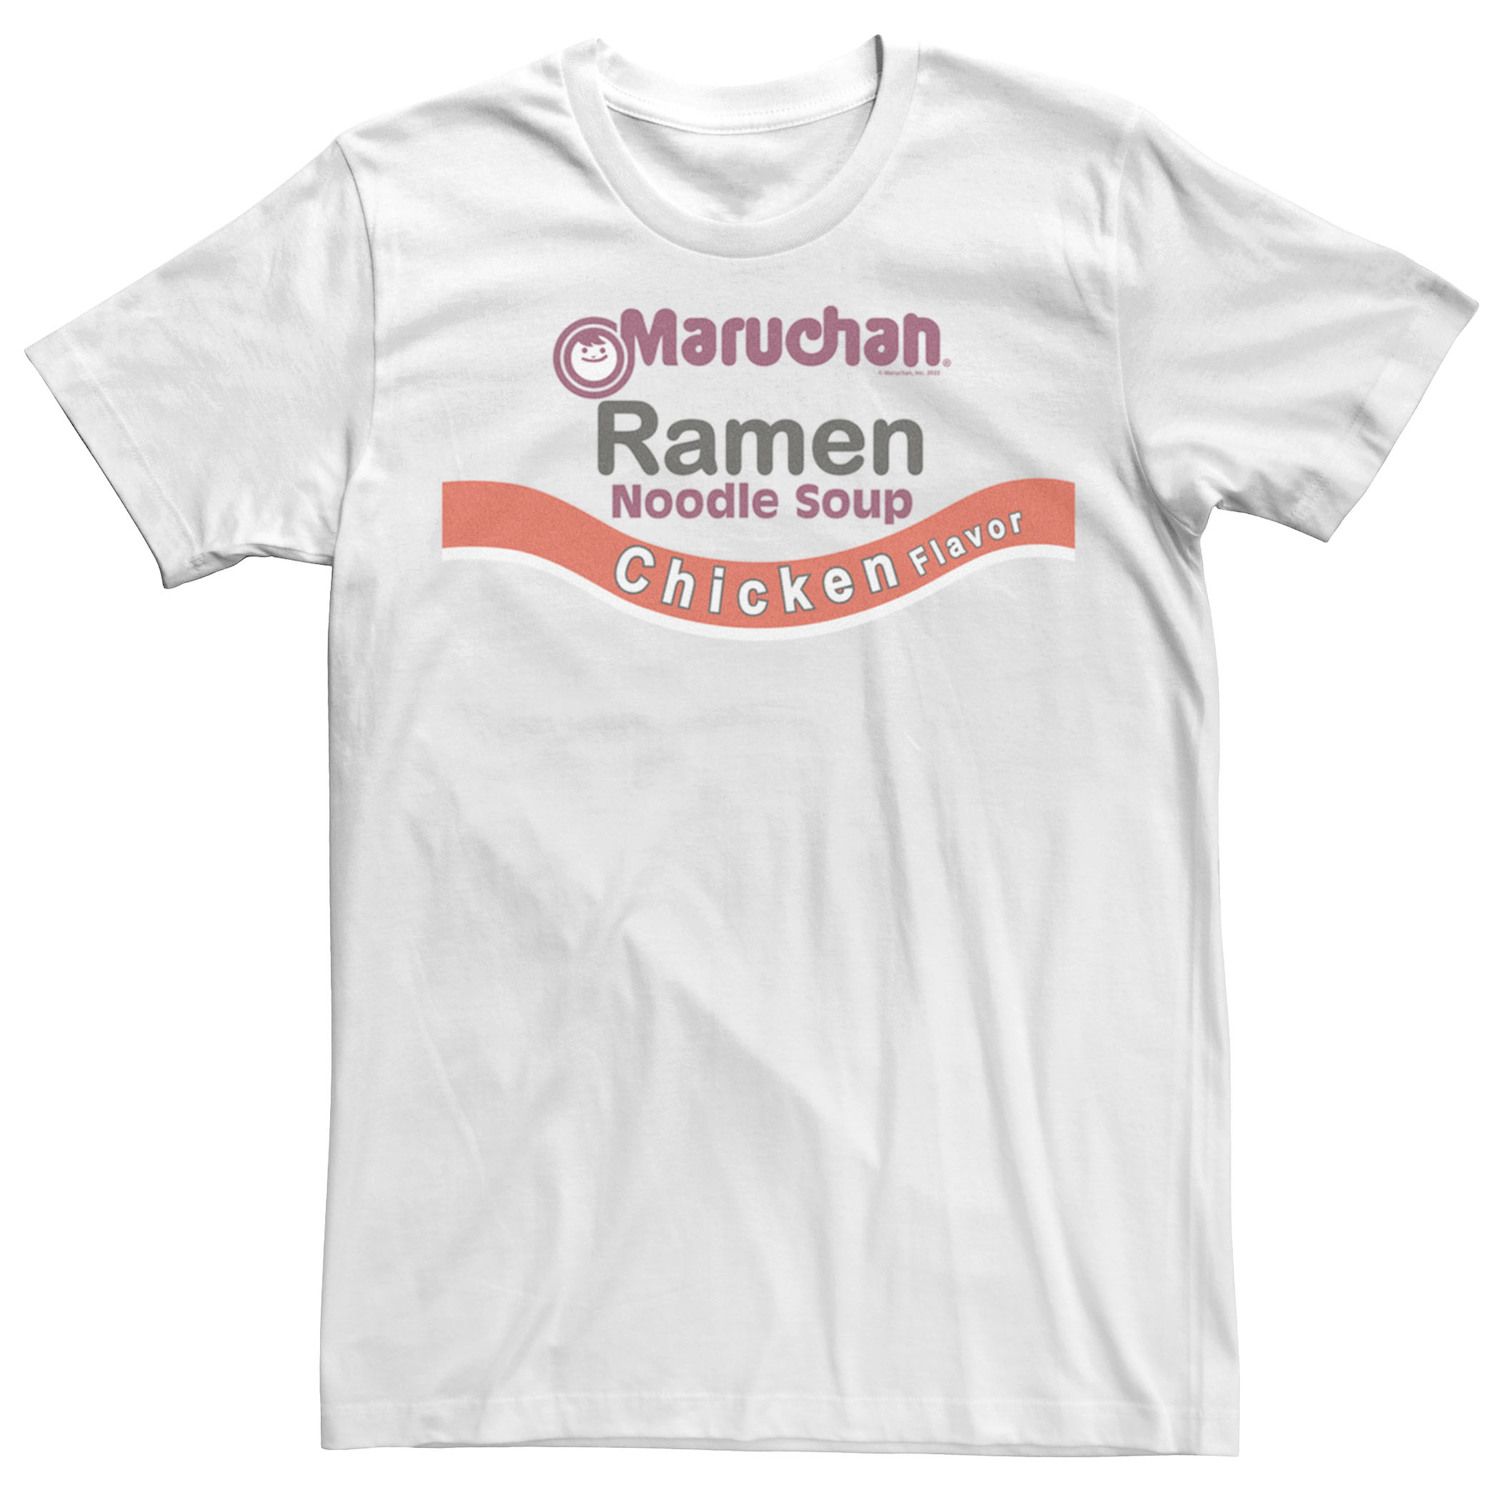 Мужская футболка с логотипом Maruchan Ramen, суп с лапшой, куриным вкусом Licensed Character